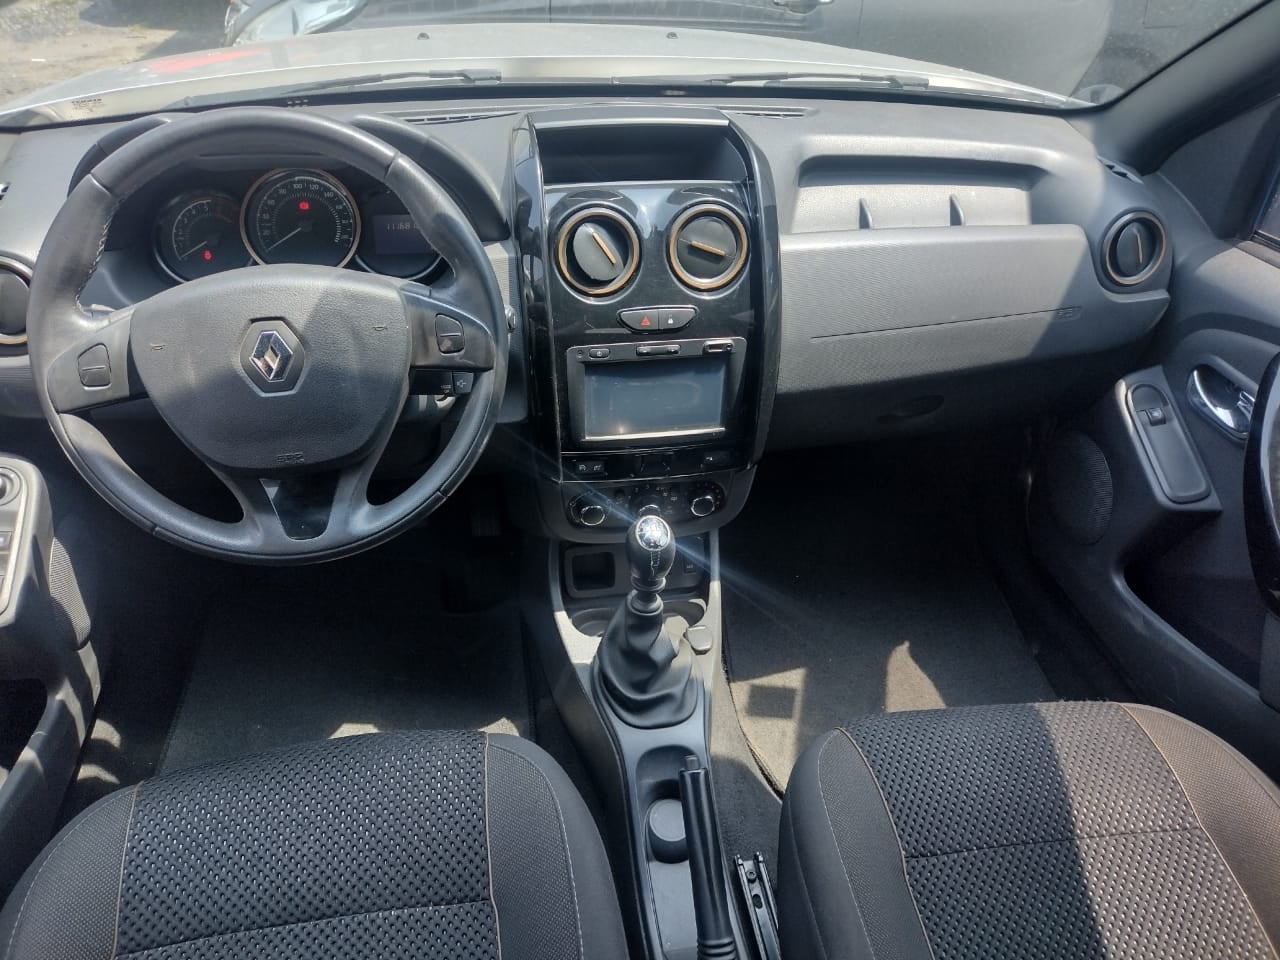 2018 Renault Duster VUD 5 pts. Intens, TM6, a/ac., VE, MP3, GPS, f. niebla, RA-16